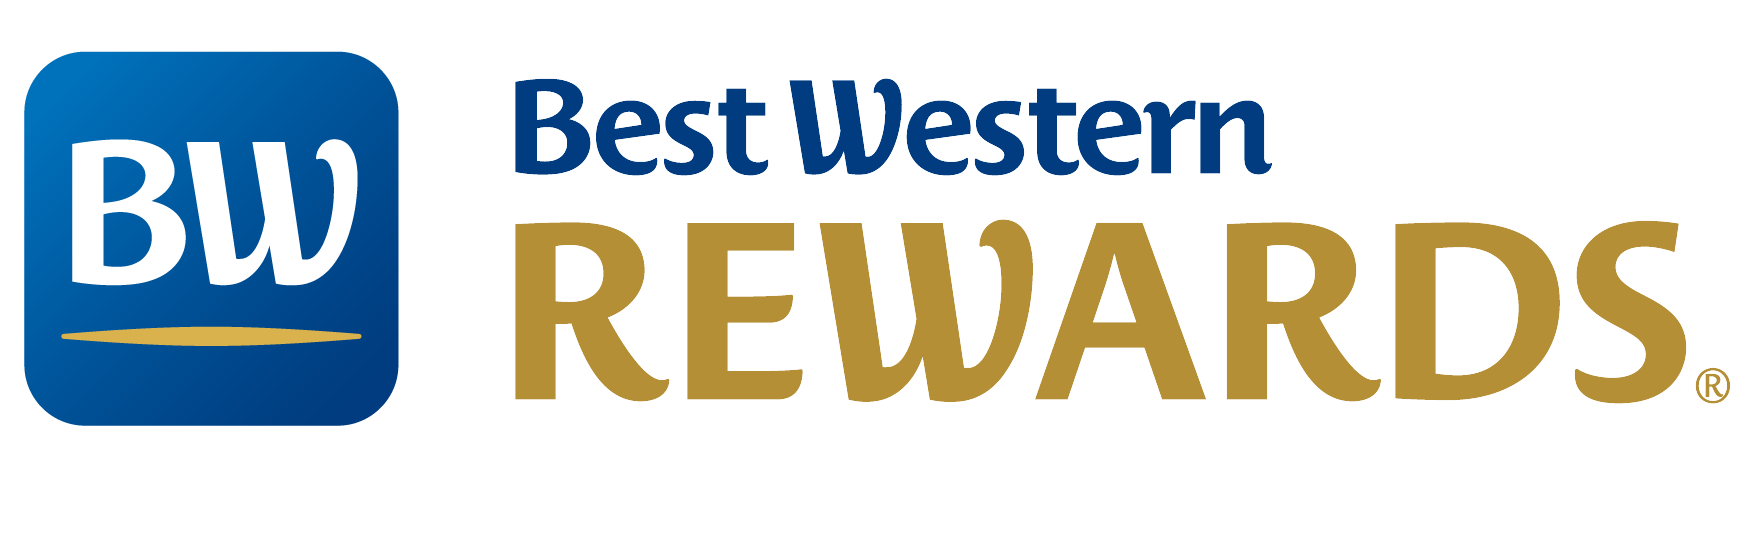 Logo de Best Western Rewards